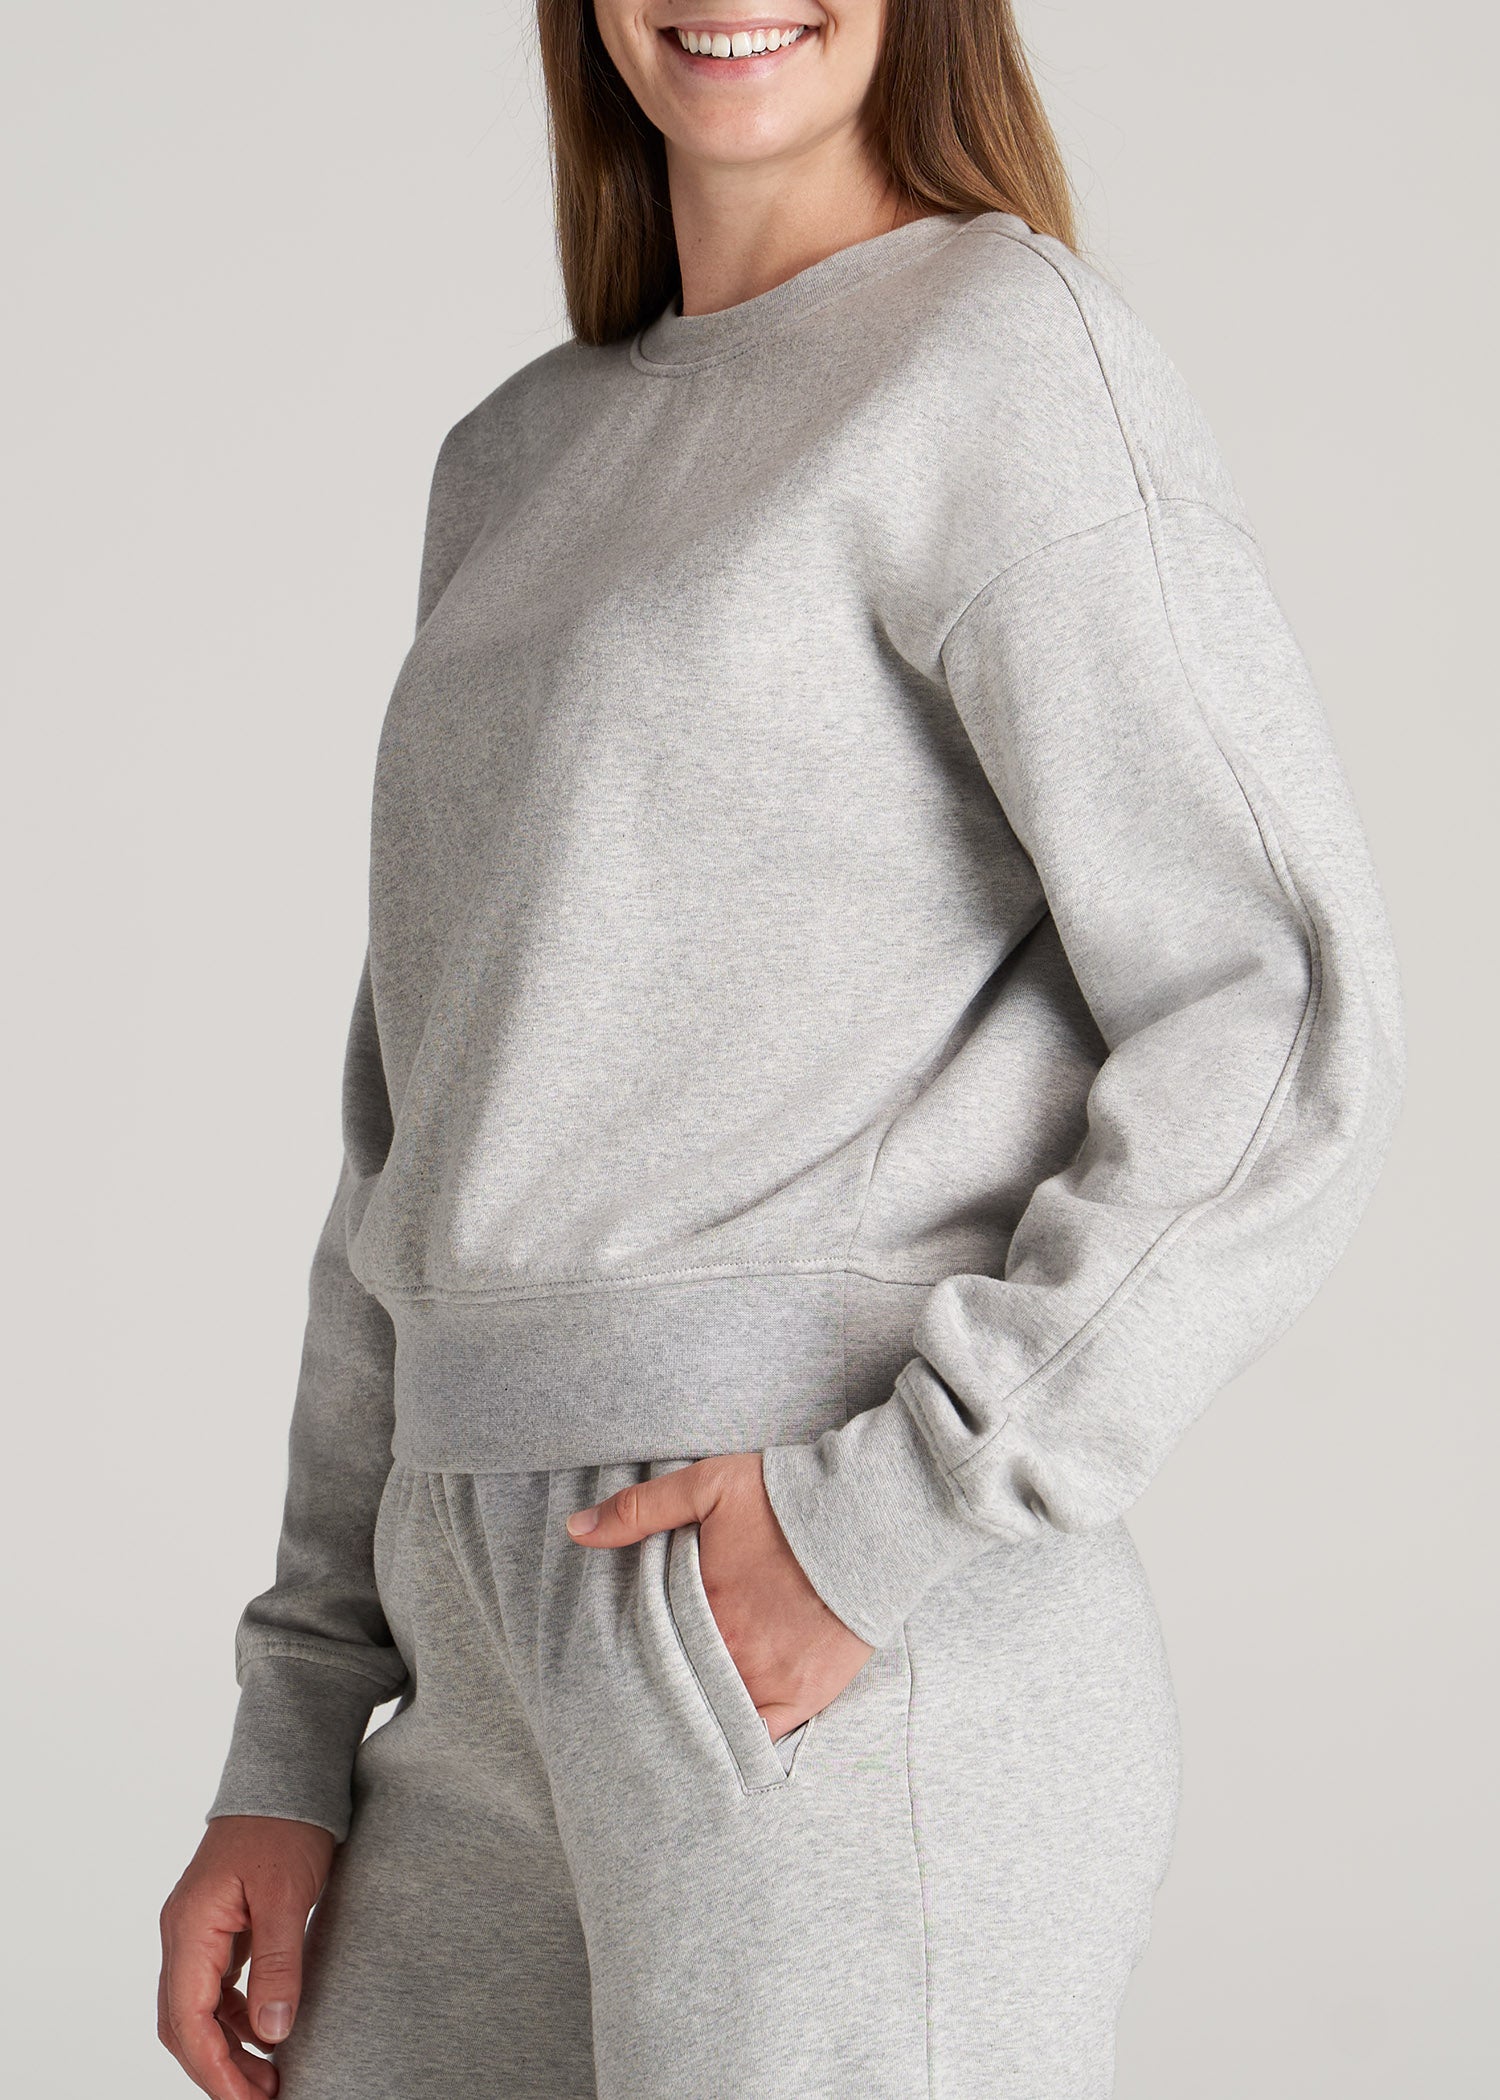 Wearever Fleece Cropped Half-Zip Sweatshirt for Tall Women in Heather Cloud White XL / Extra Tall / Heather Cloud White